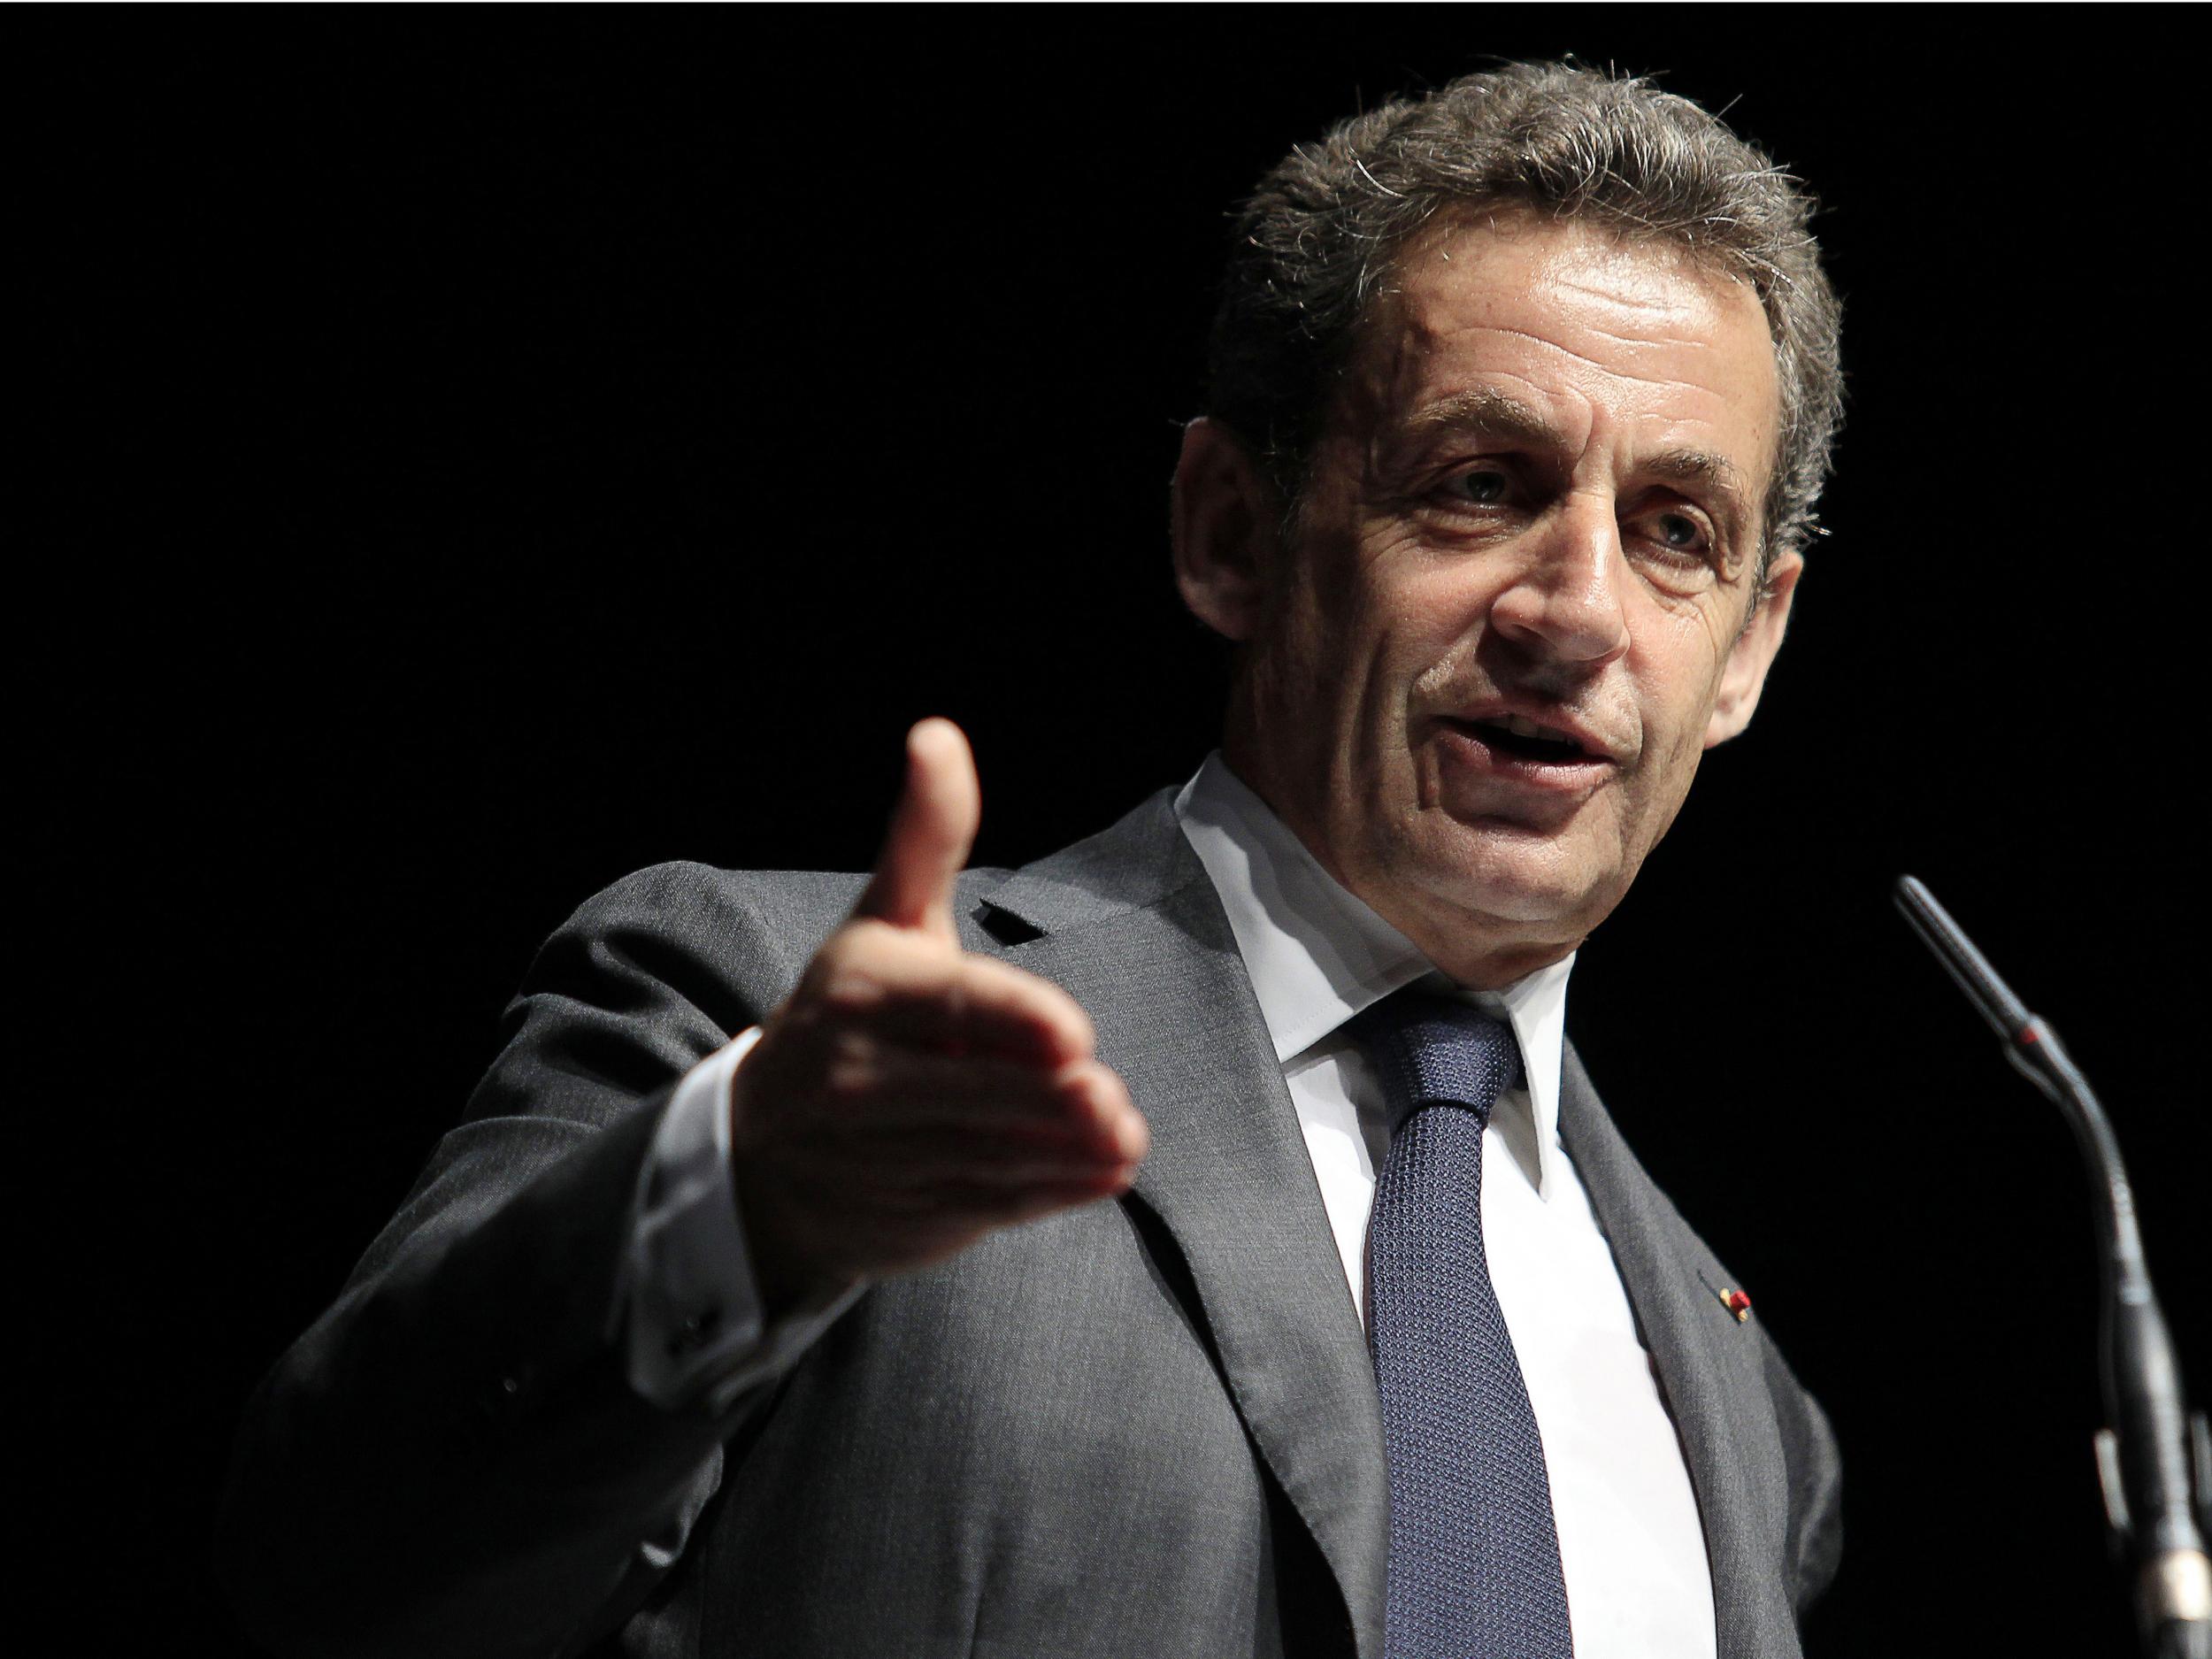 Mr Sarkozy was put under formal investigation earlier this year